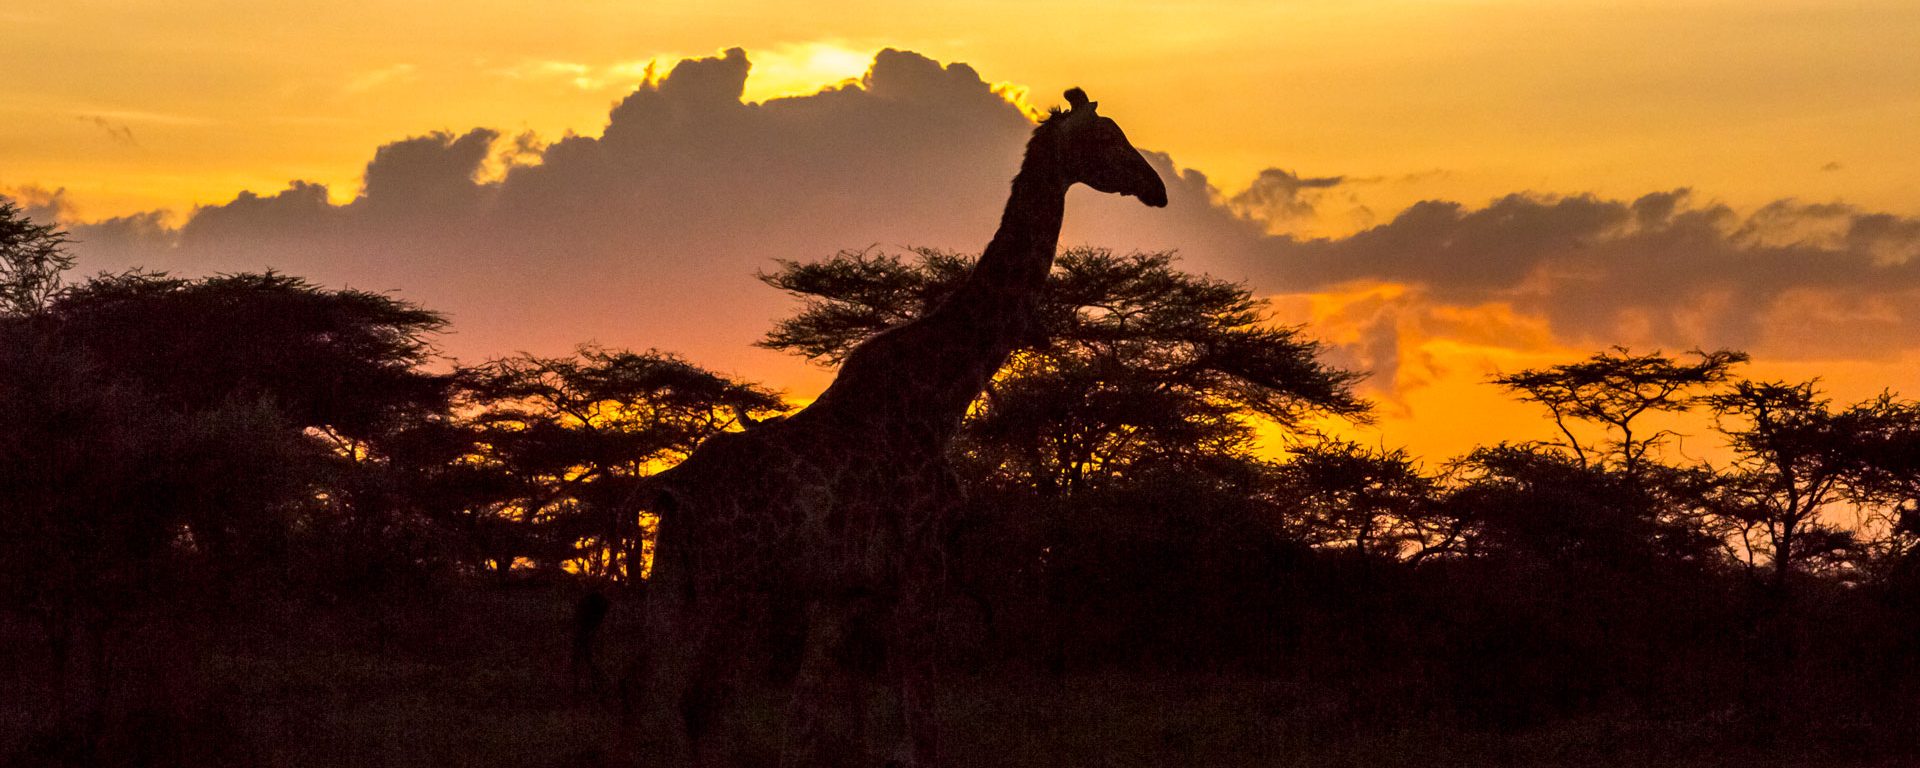 Silhouette of Maasai giraffe and acacia trees near Ngorongoro, Tanzania